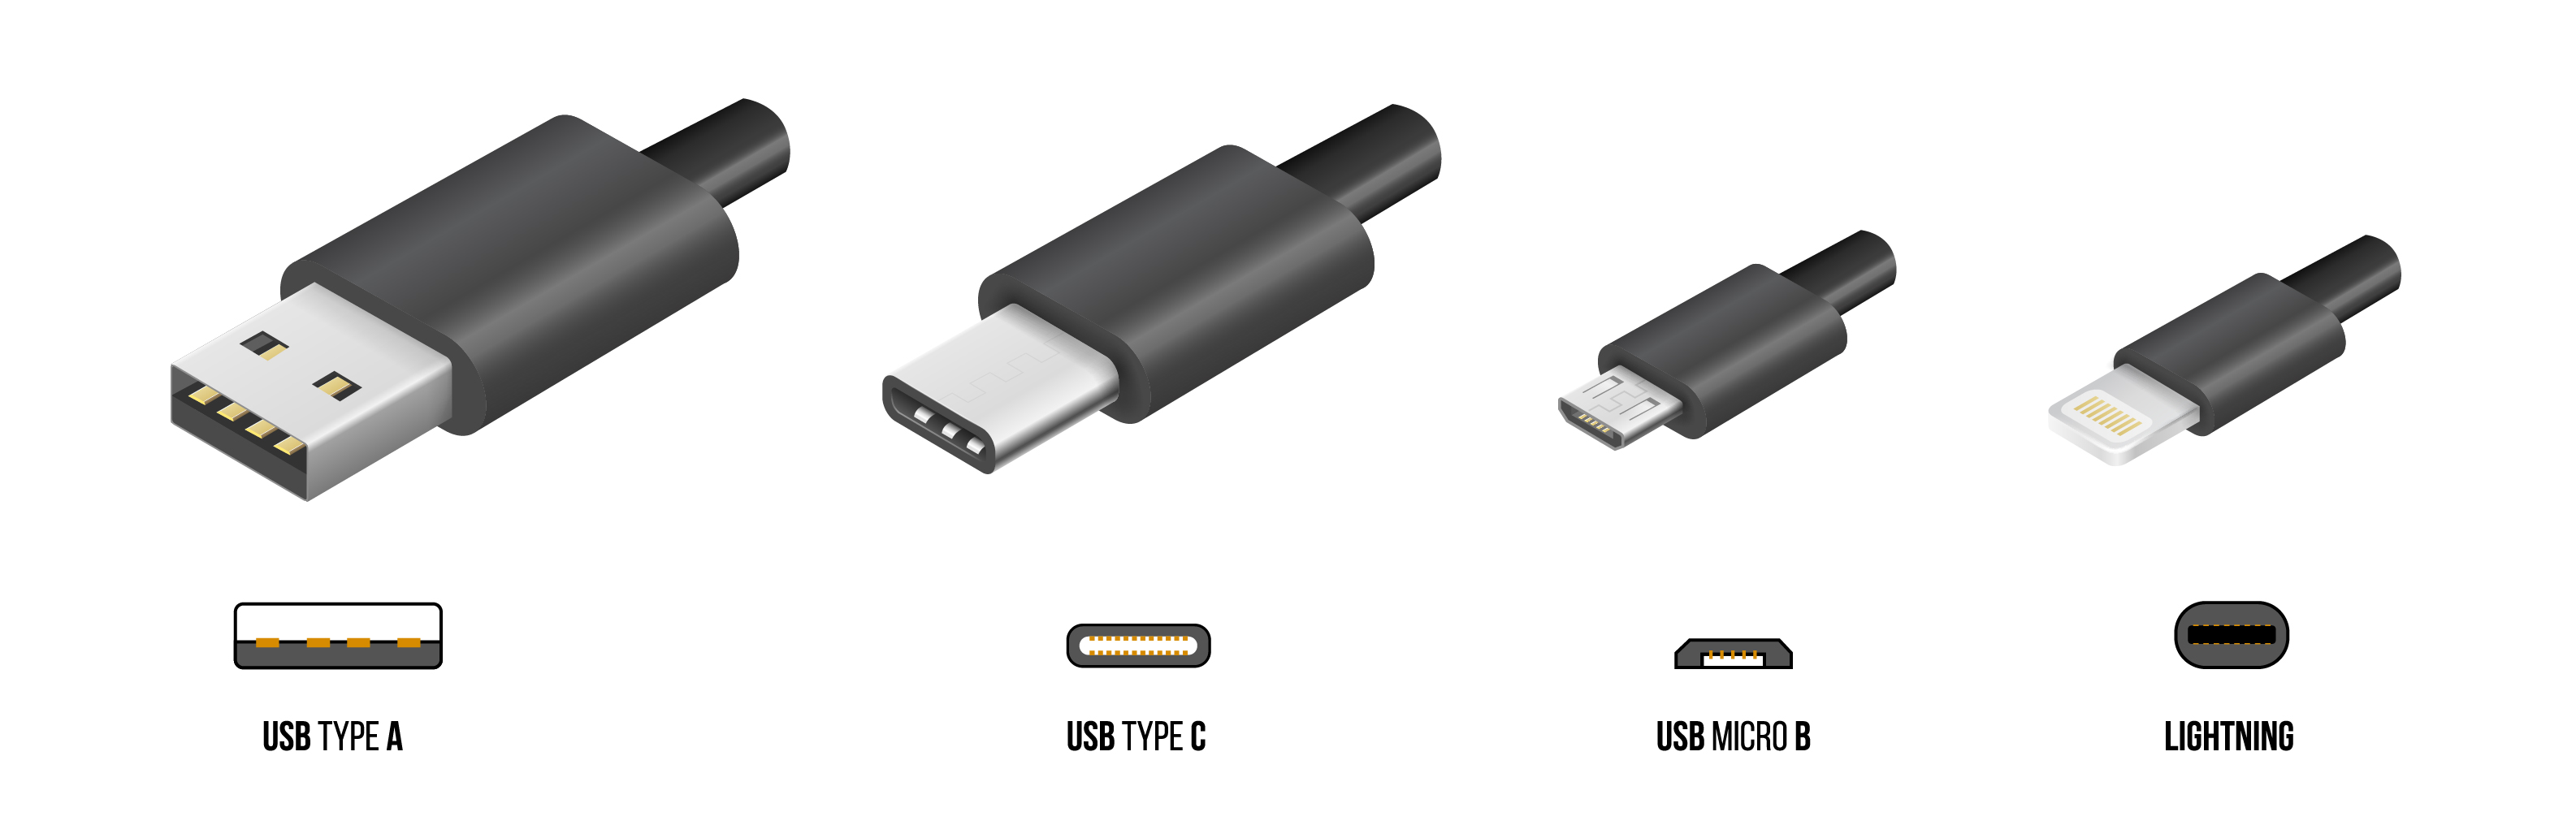 USB-USBtypeC-microUSB-lighting.jpg